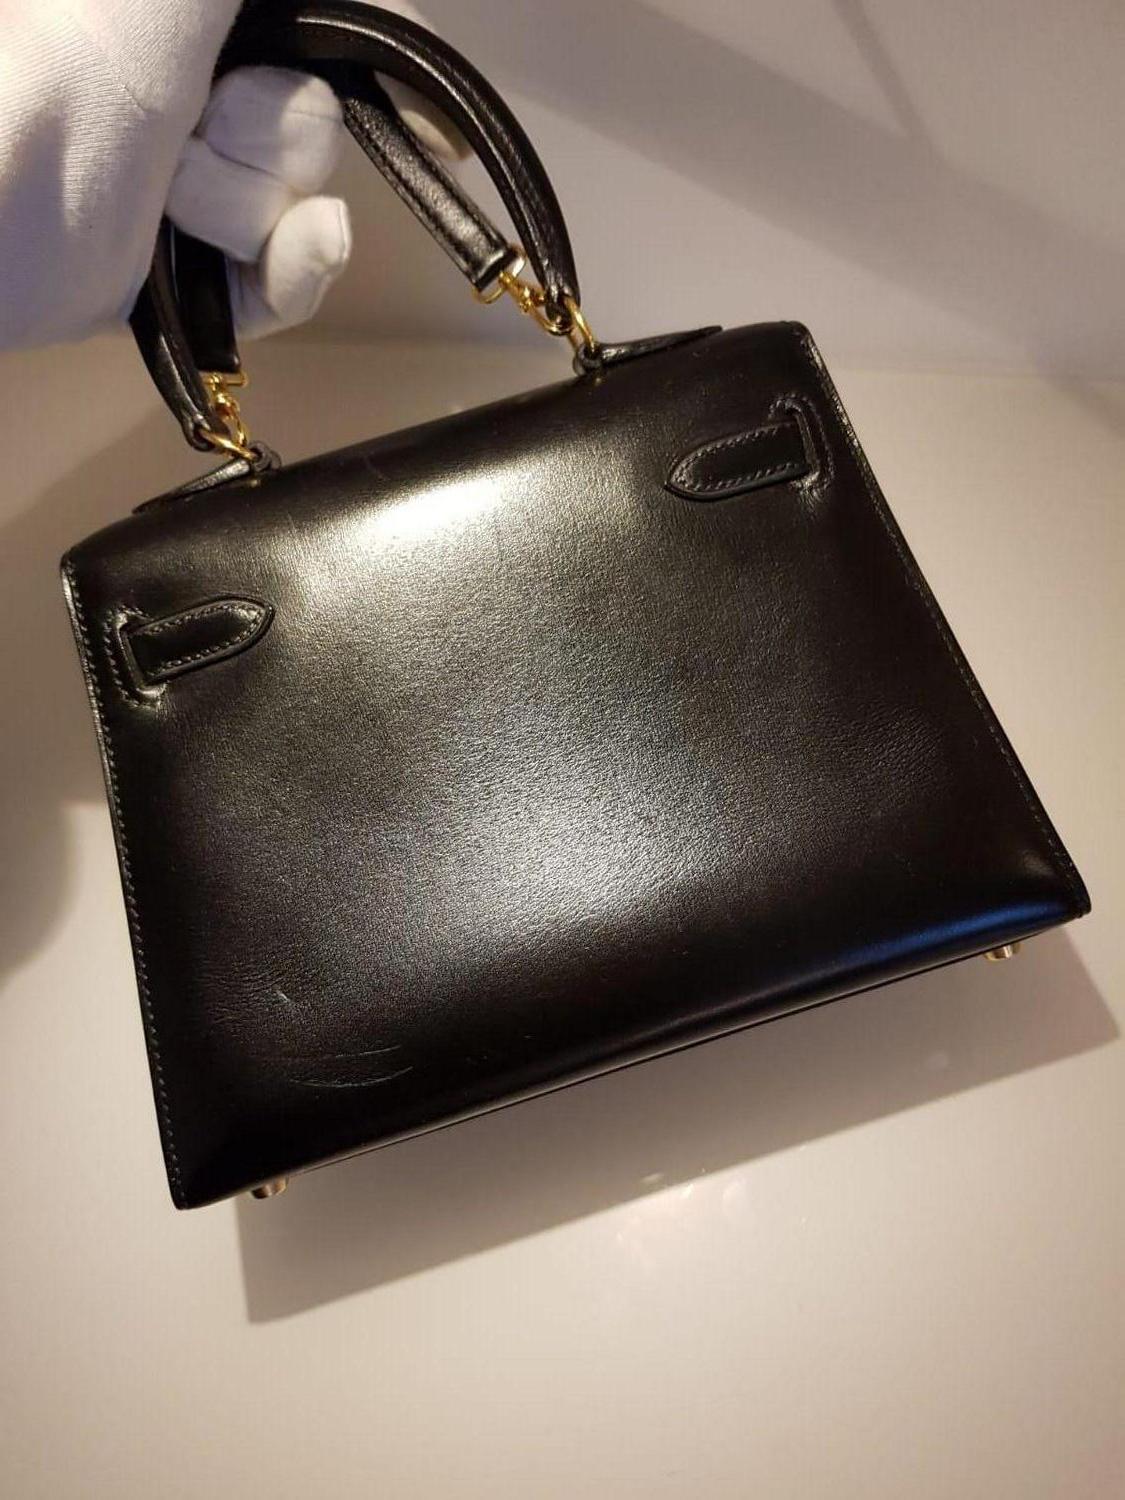 Vintage Hermès Mini Kelly Sellier Bag Black Box Leather Ghw 20 cm 5